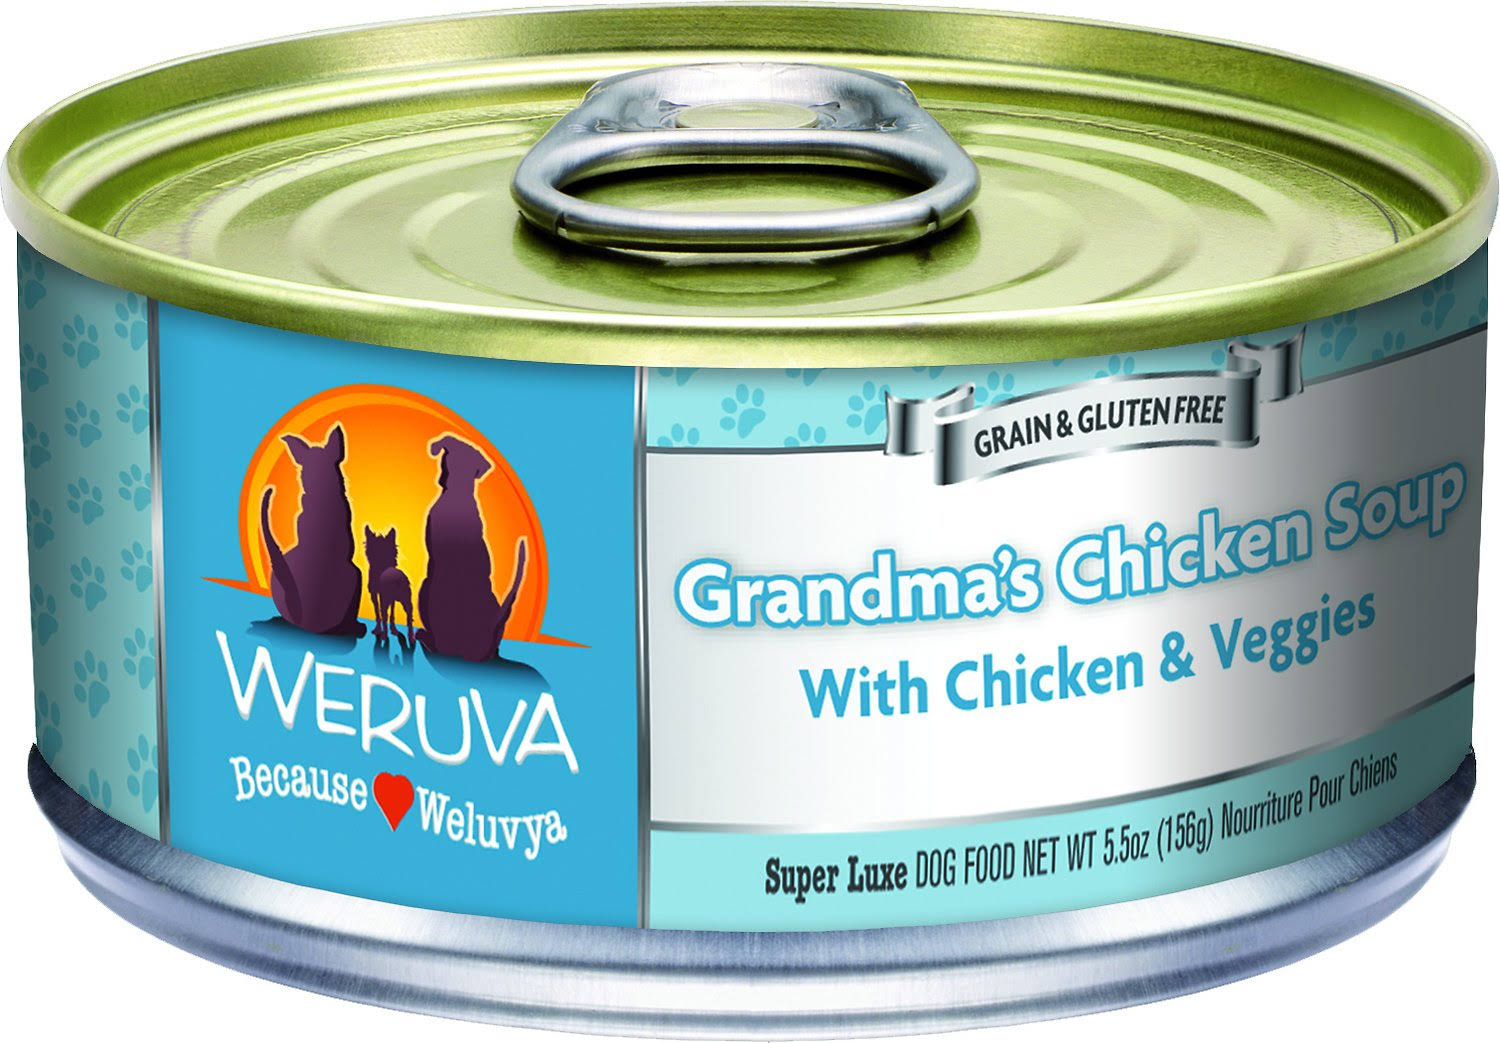 Weruva Grain Free Canned Dog Food - Grandma's Chicken Soup, Adult, 14oz